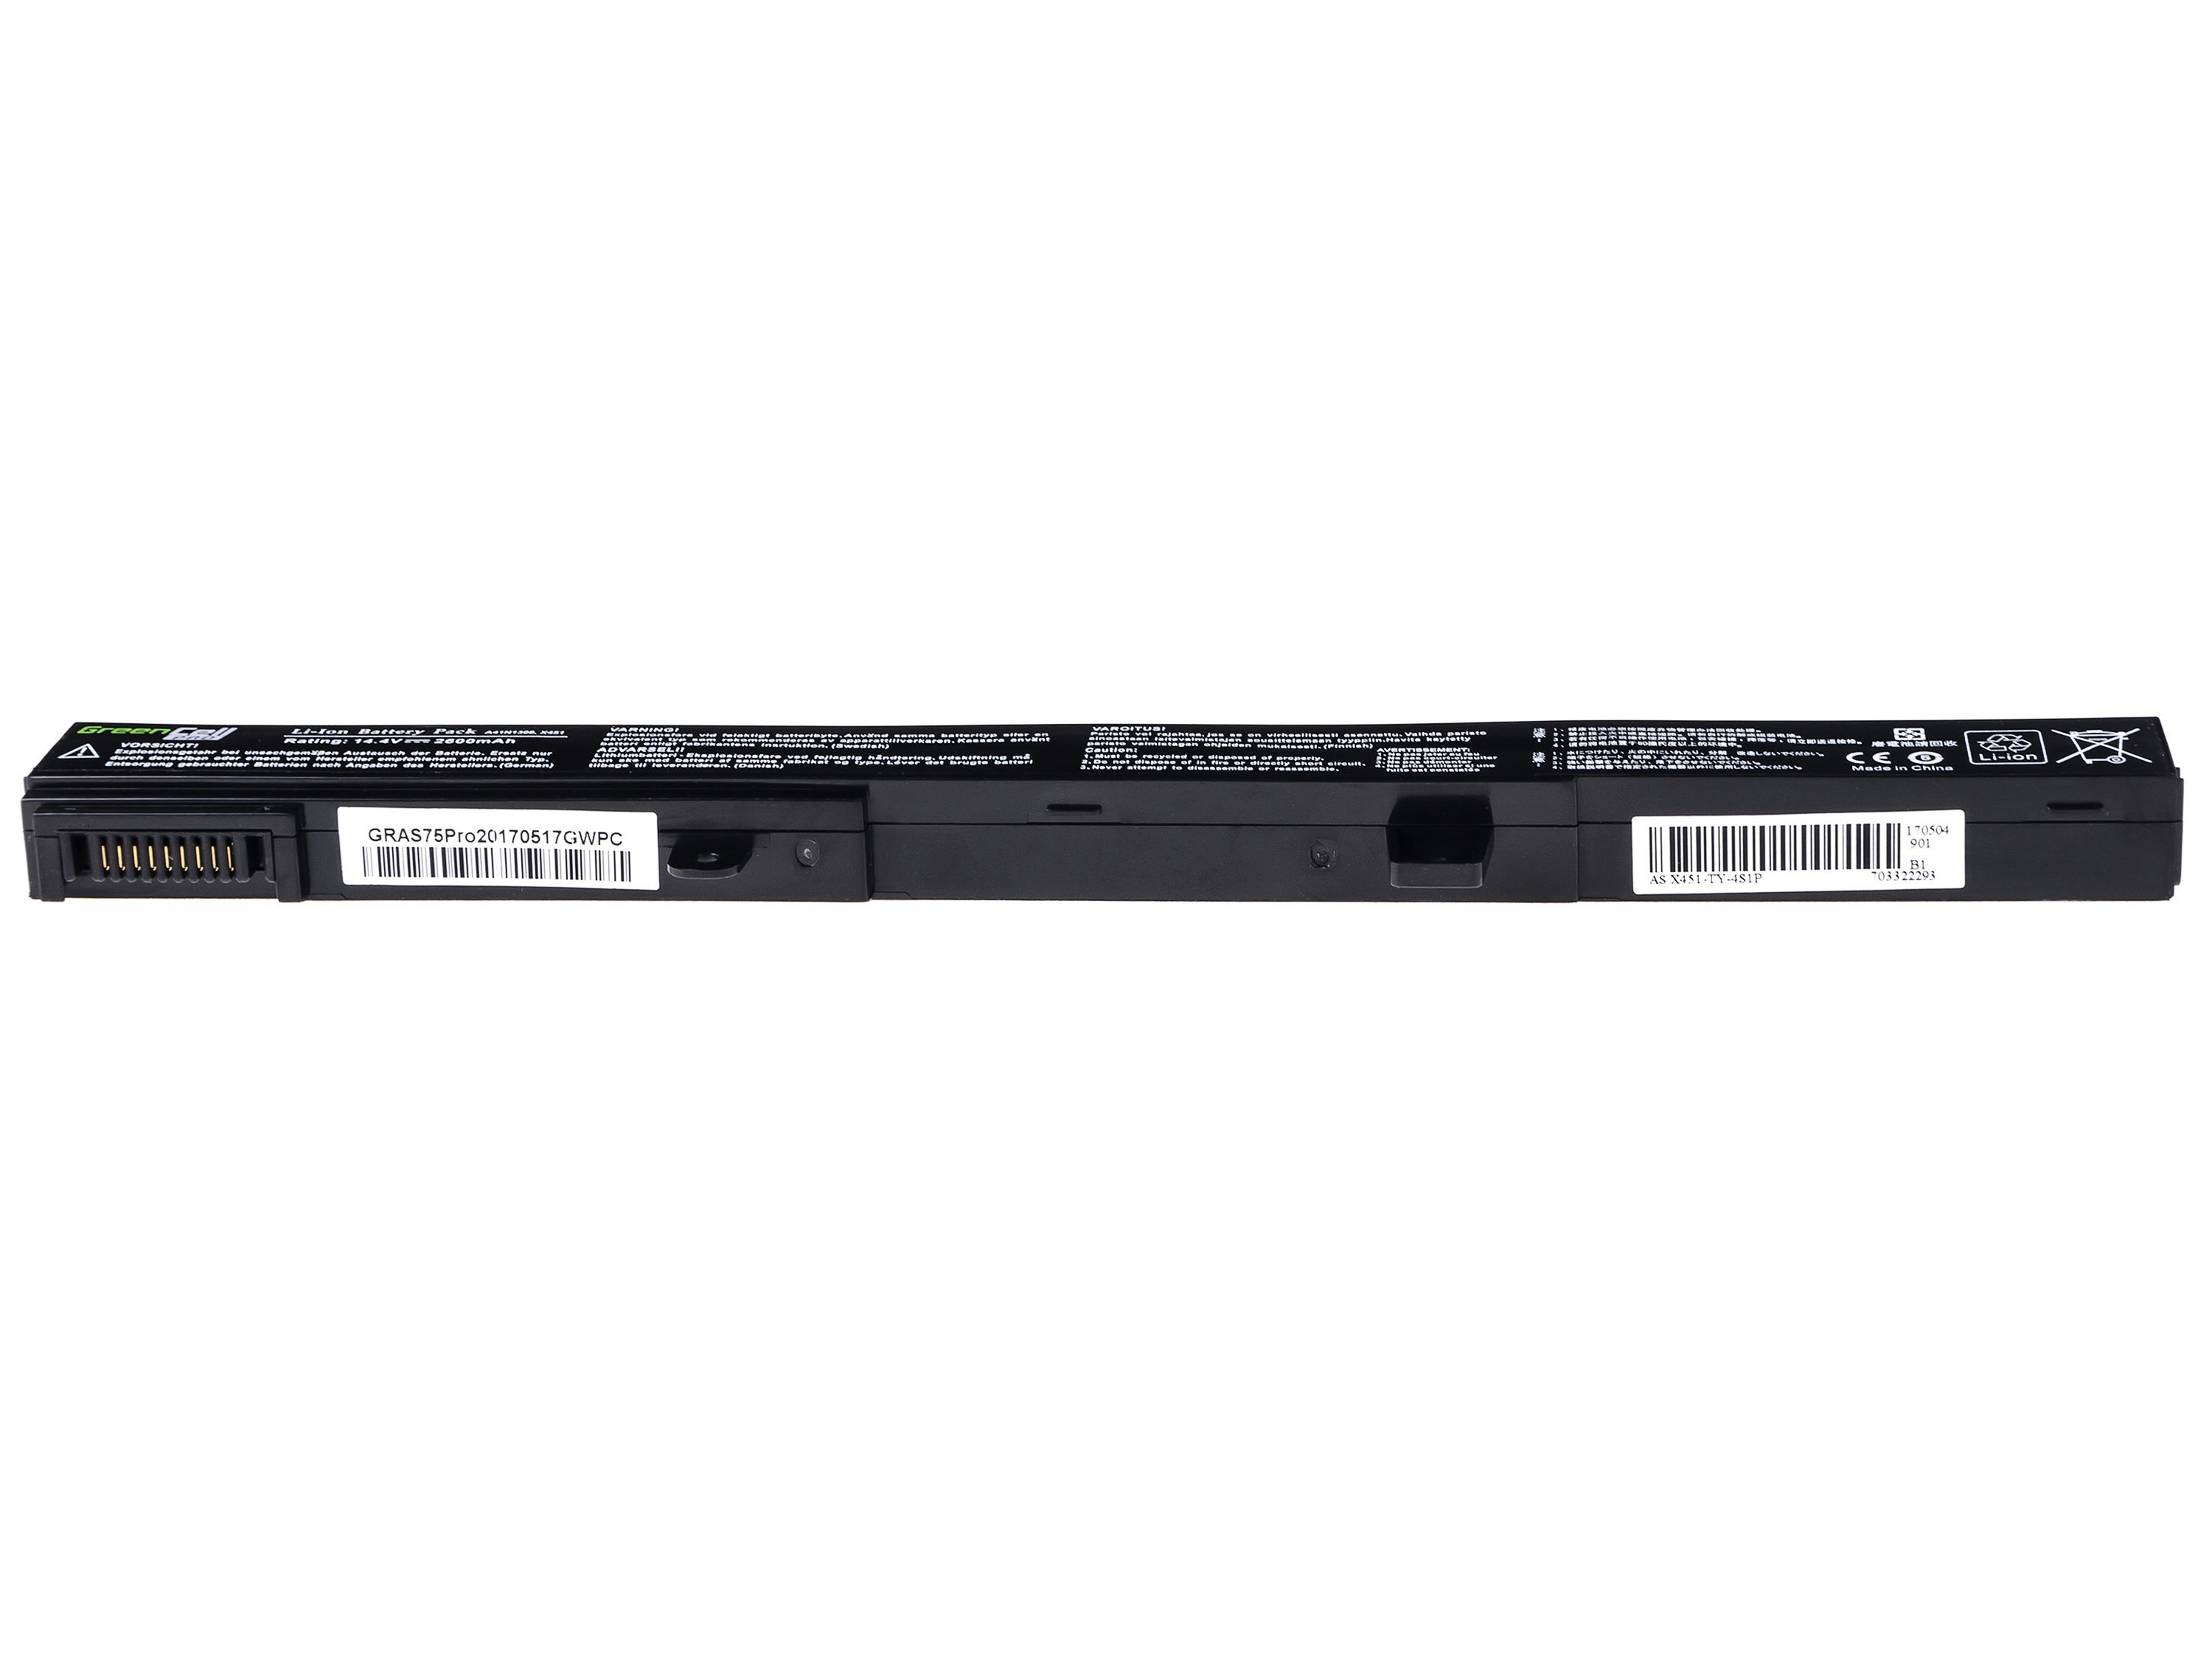 Green Cell PRO laptop batteri til Asus R508 R556 R509 X551